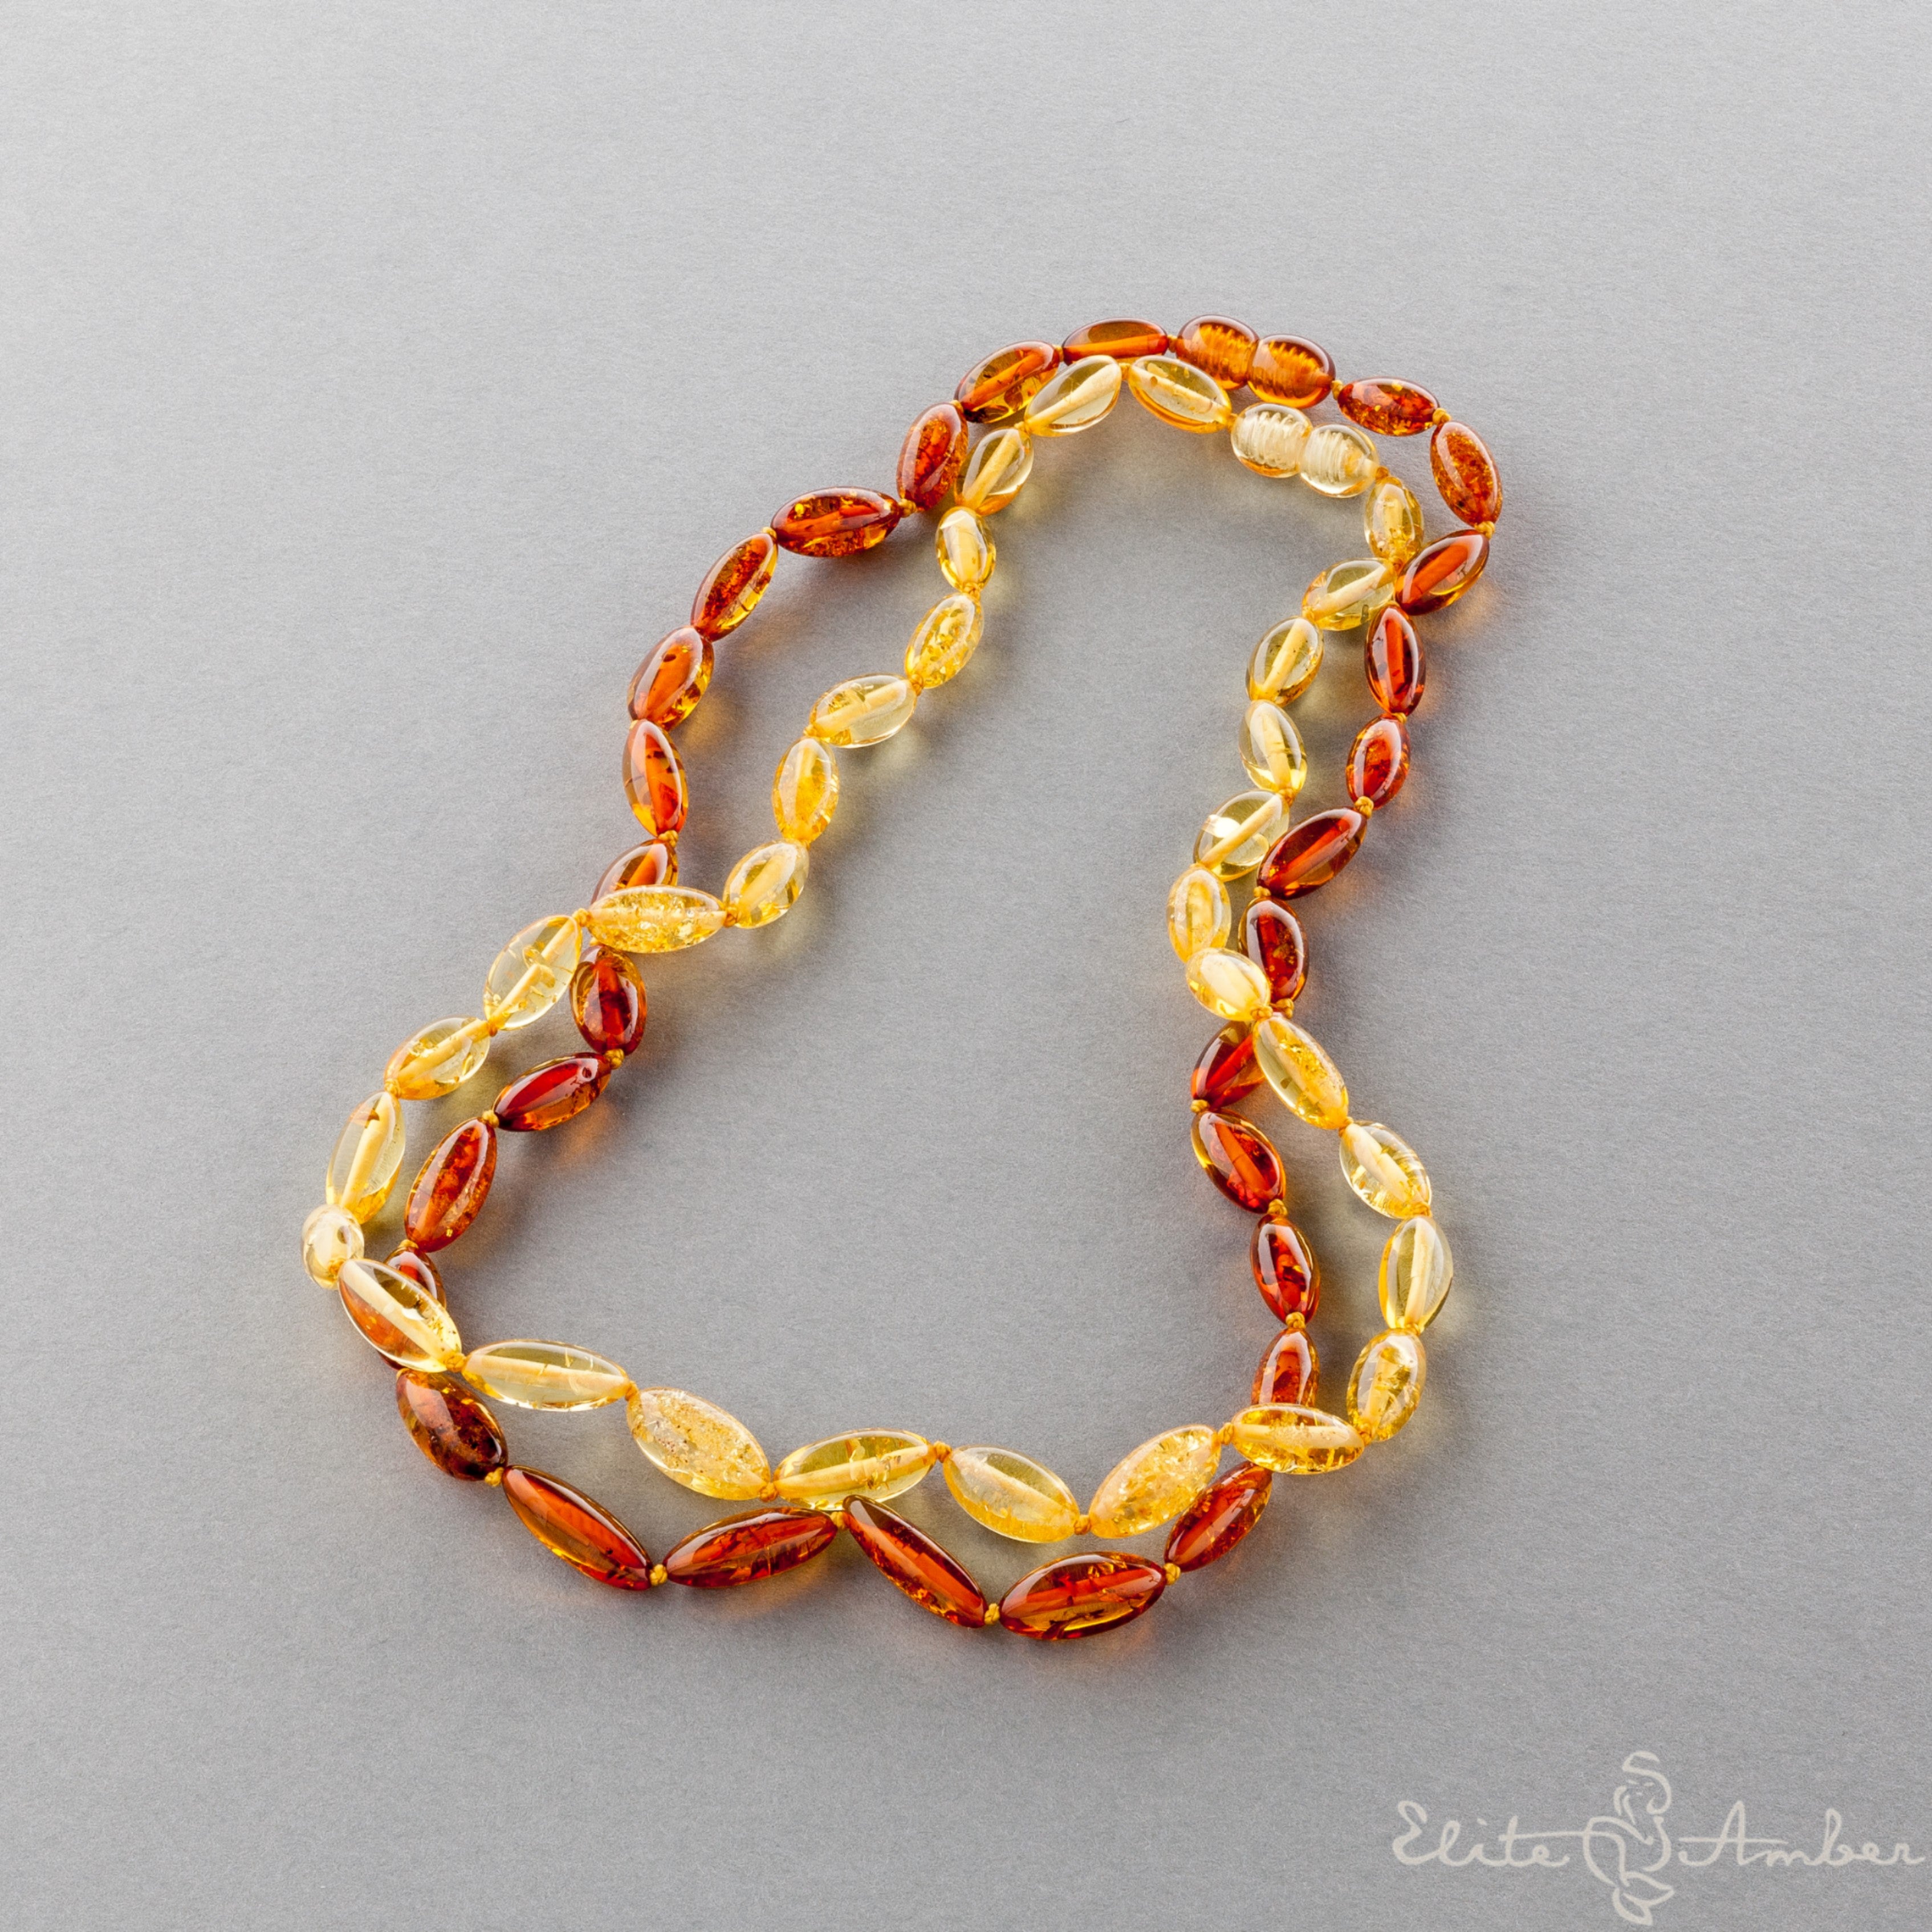 Amber necklace "Honey and lemon grains"